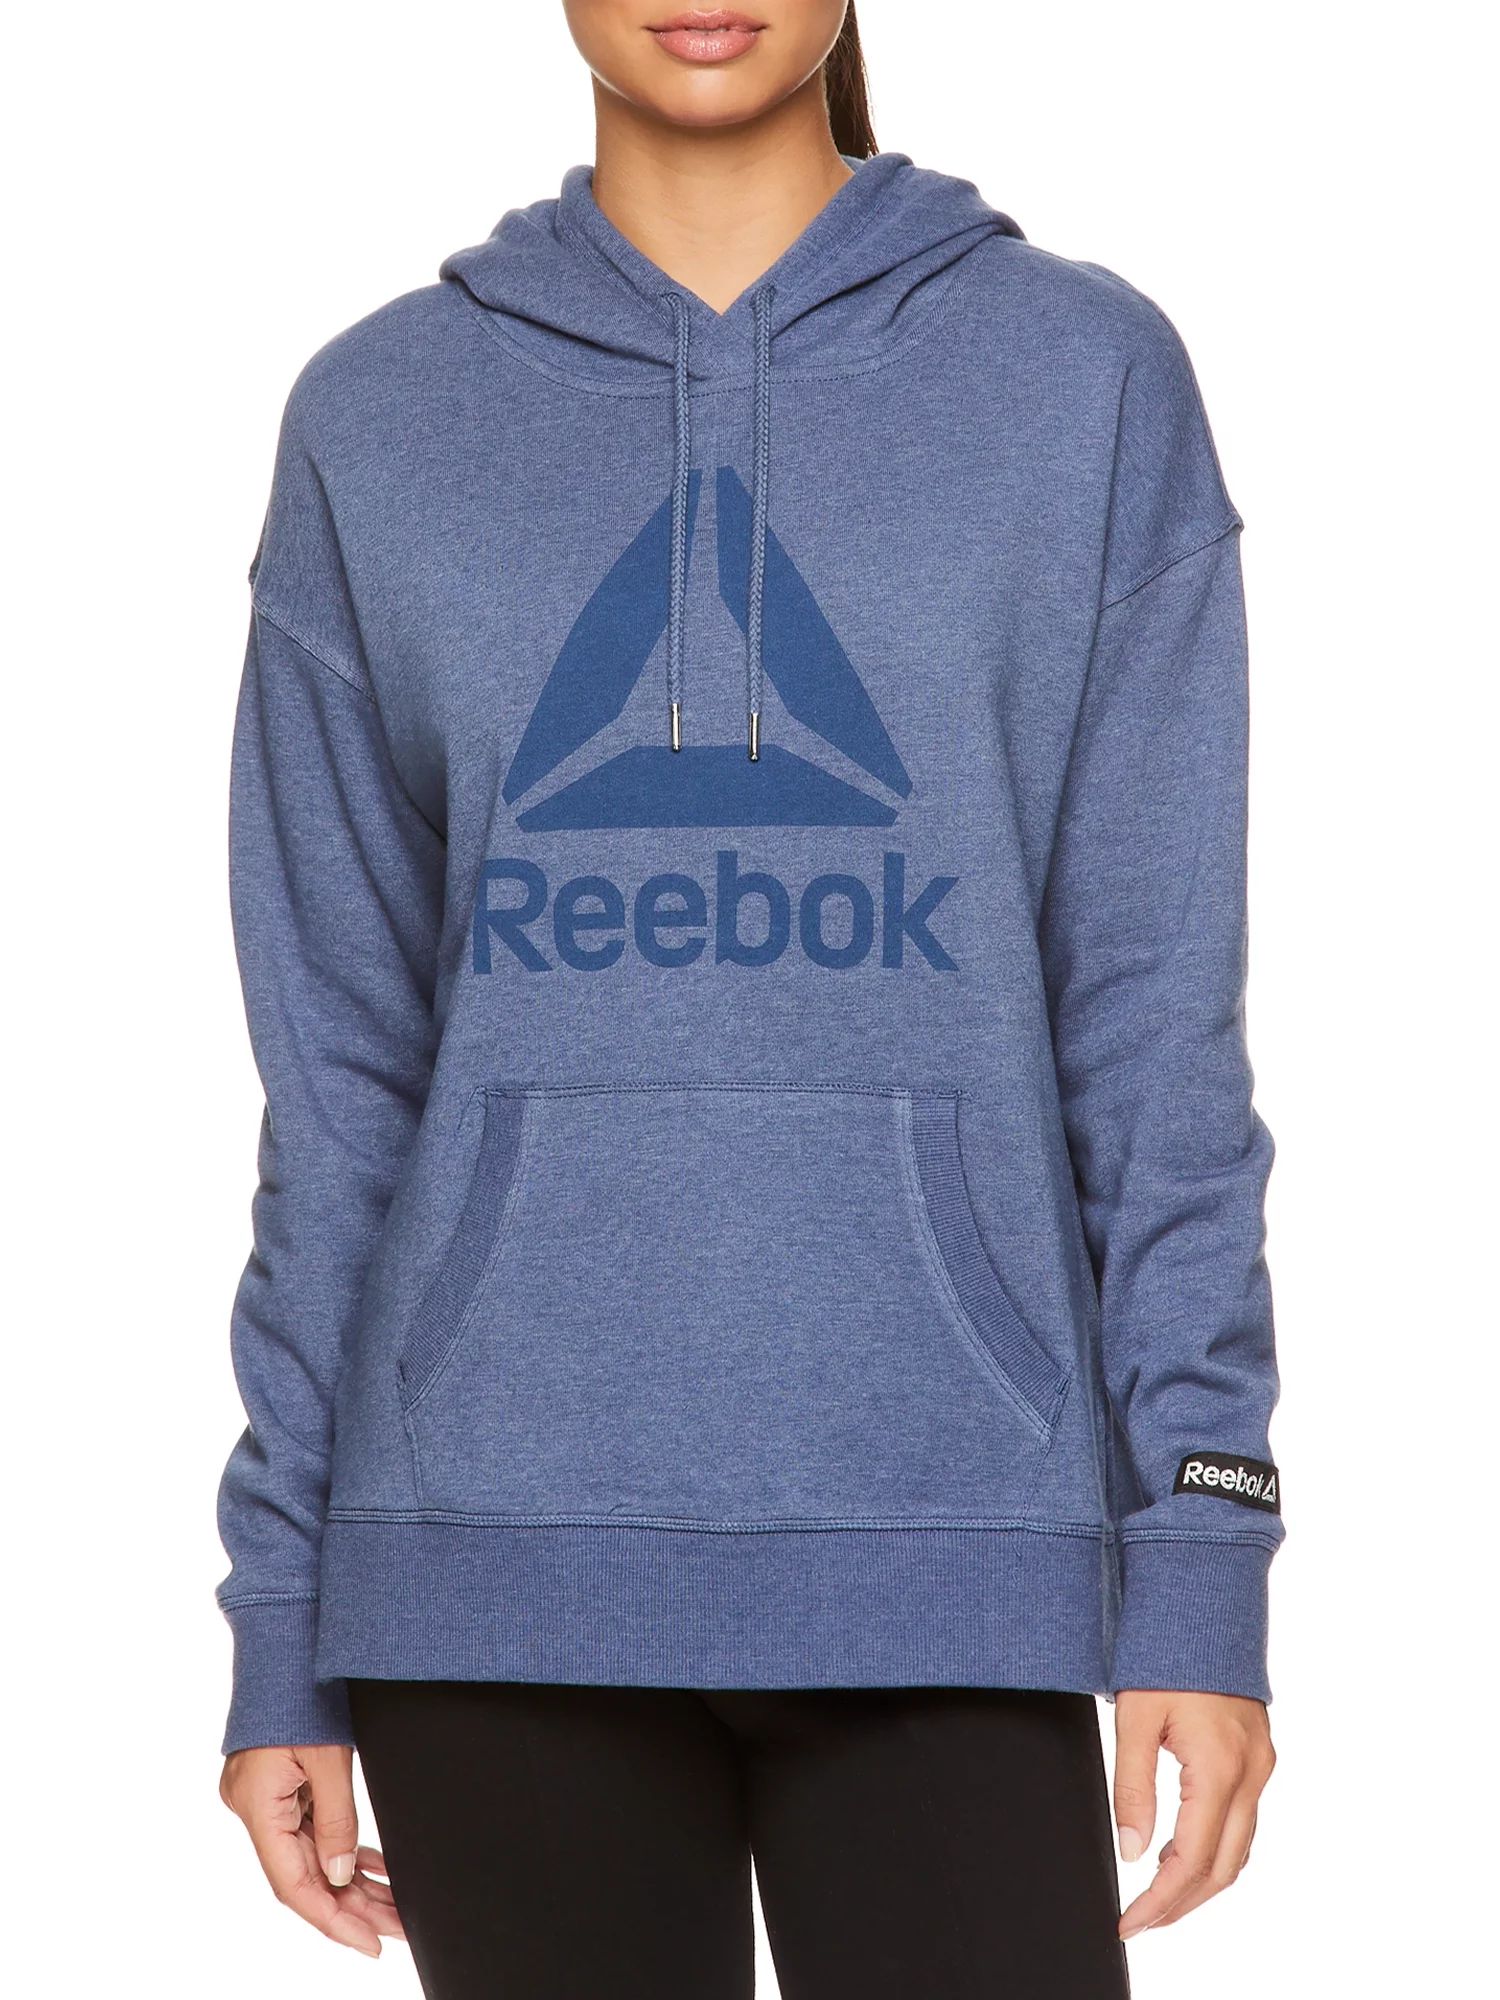 Reebok Women's Elite Cozy Graphic Hoodie with Drawstring and Pockets | Walmart (US)